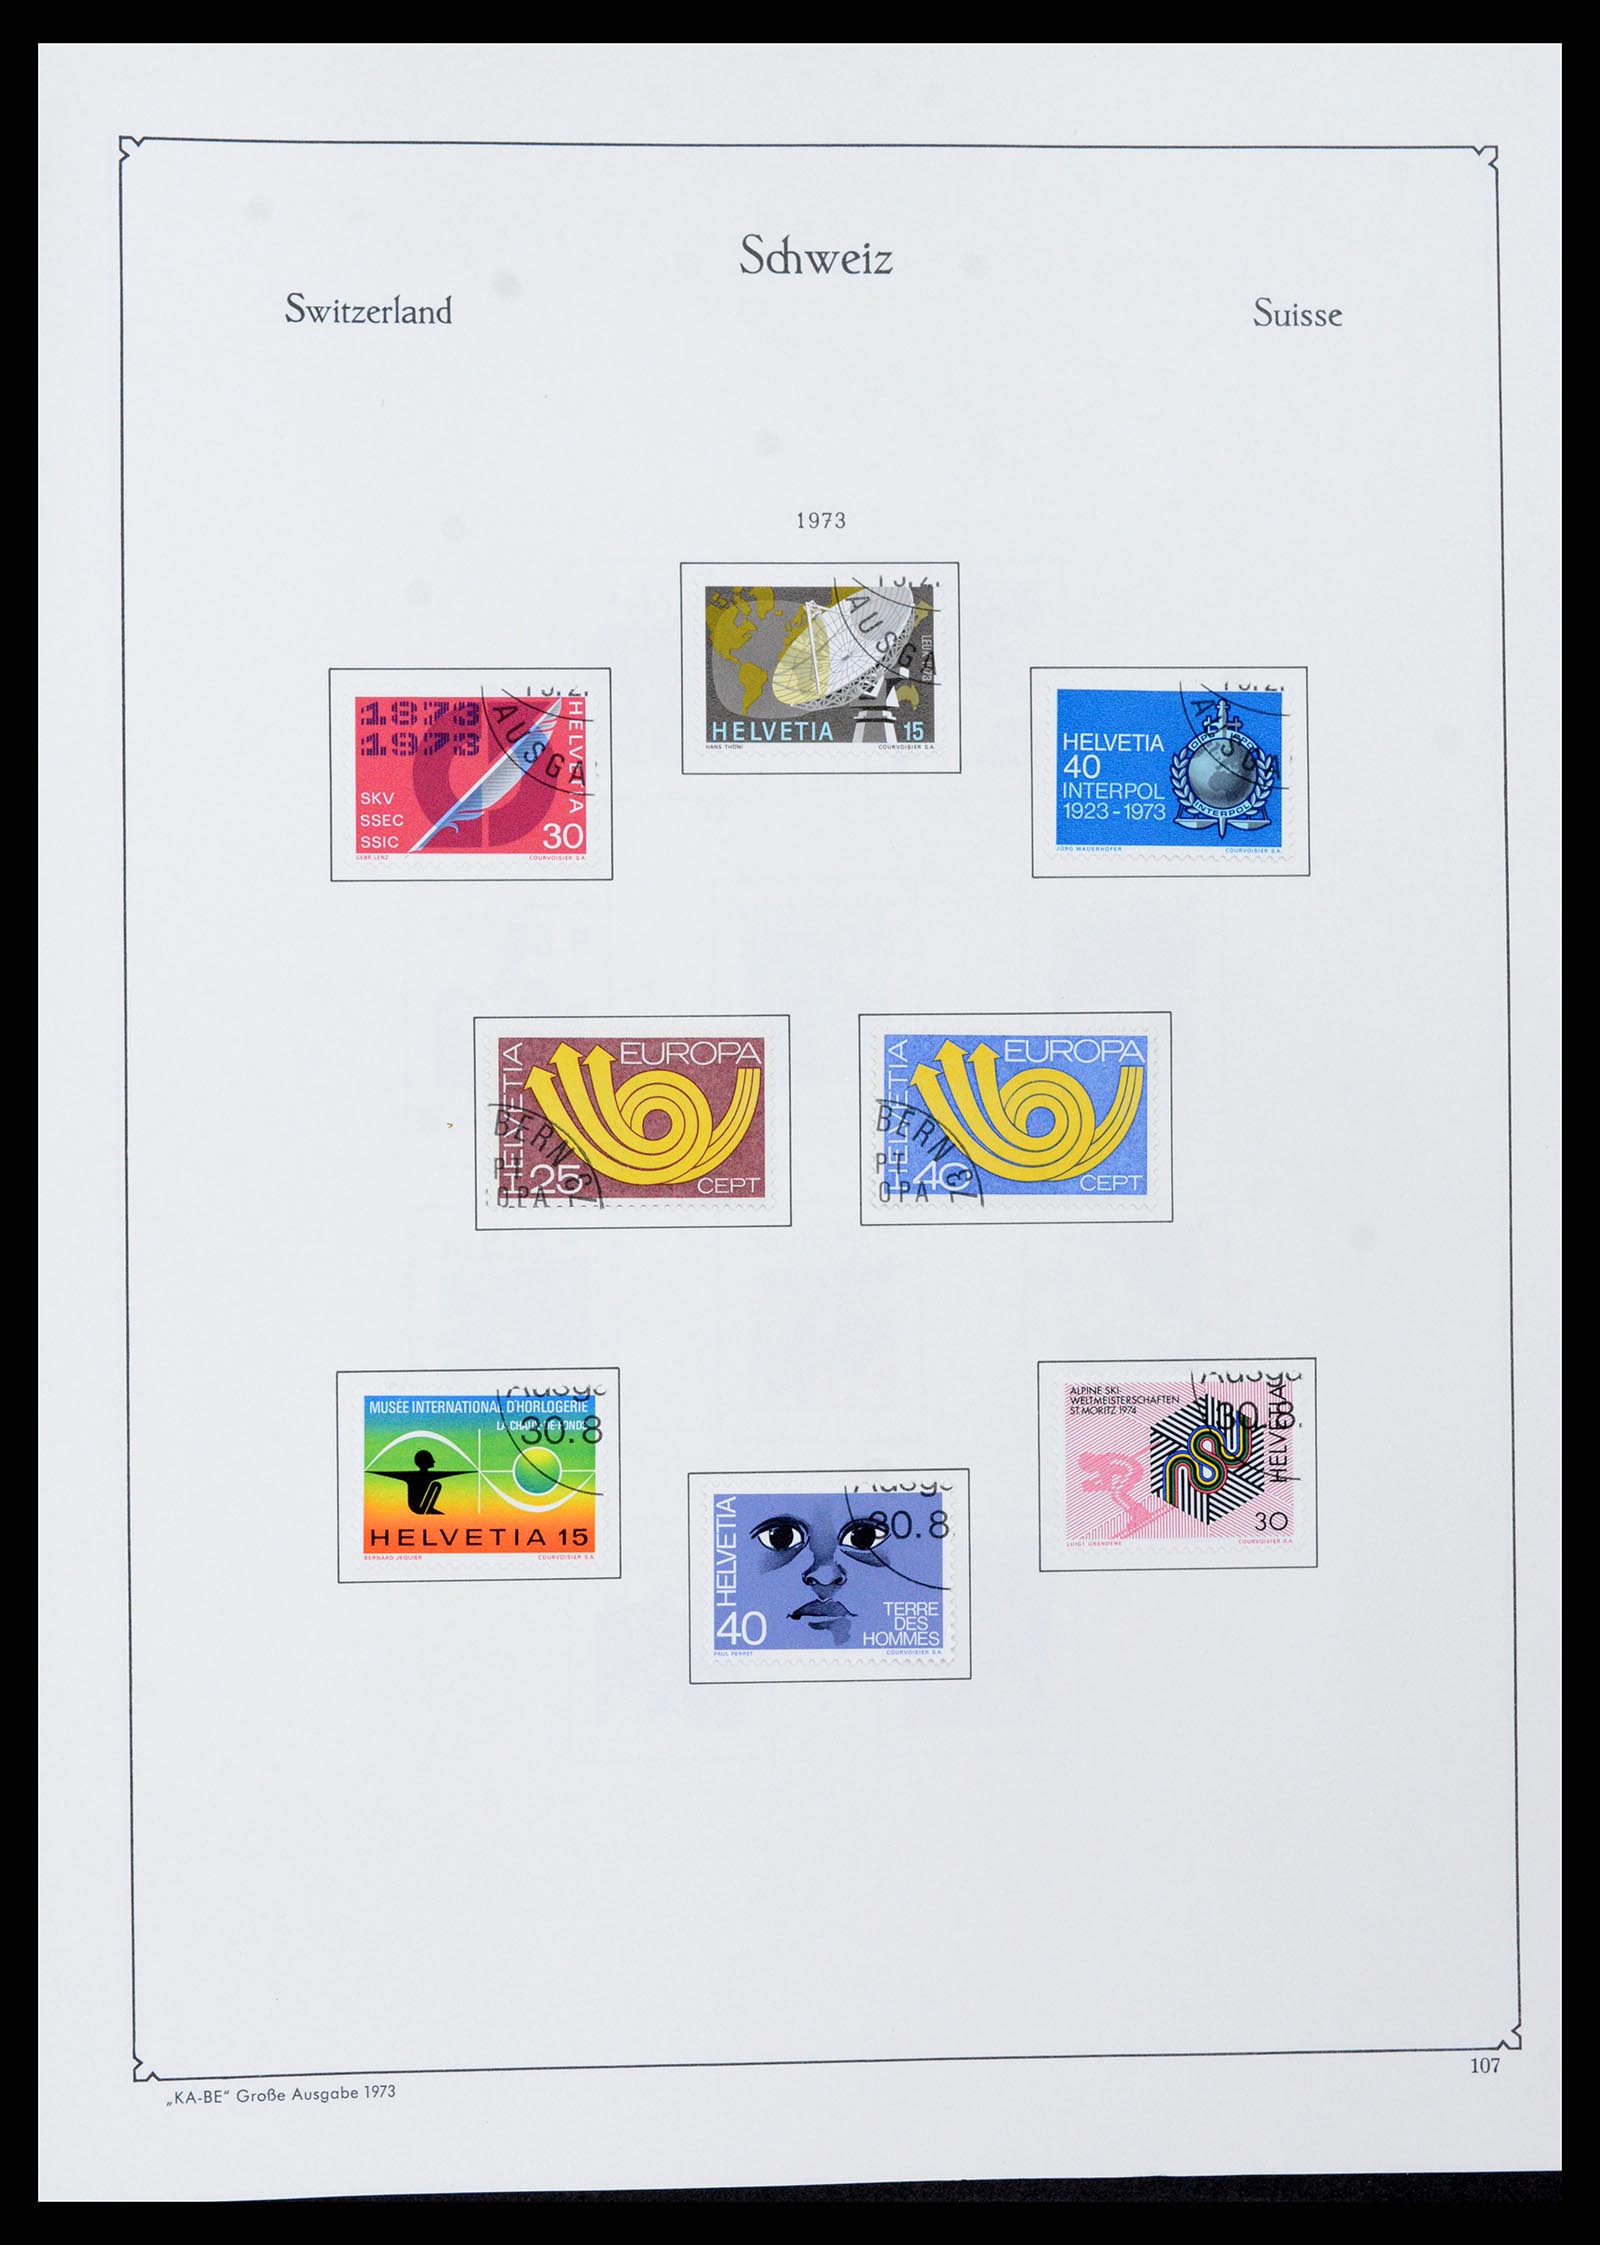 37588 109 - Stamp collection 37588 Switzerland 1854-1974.